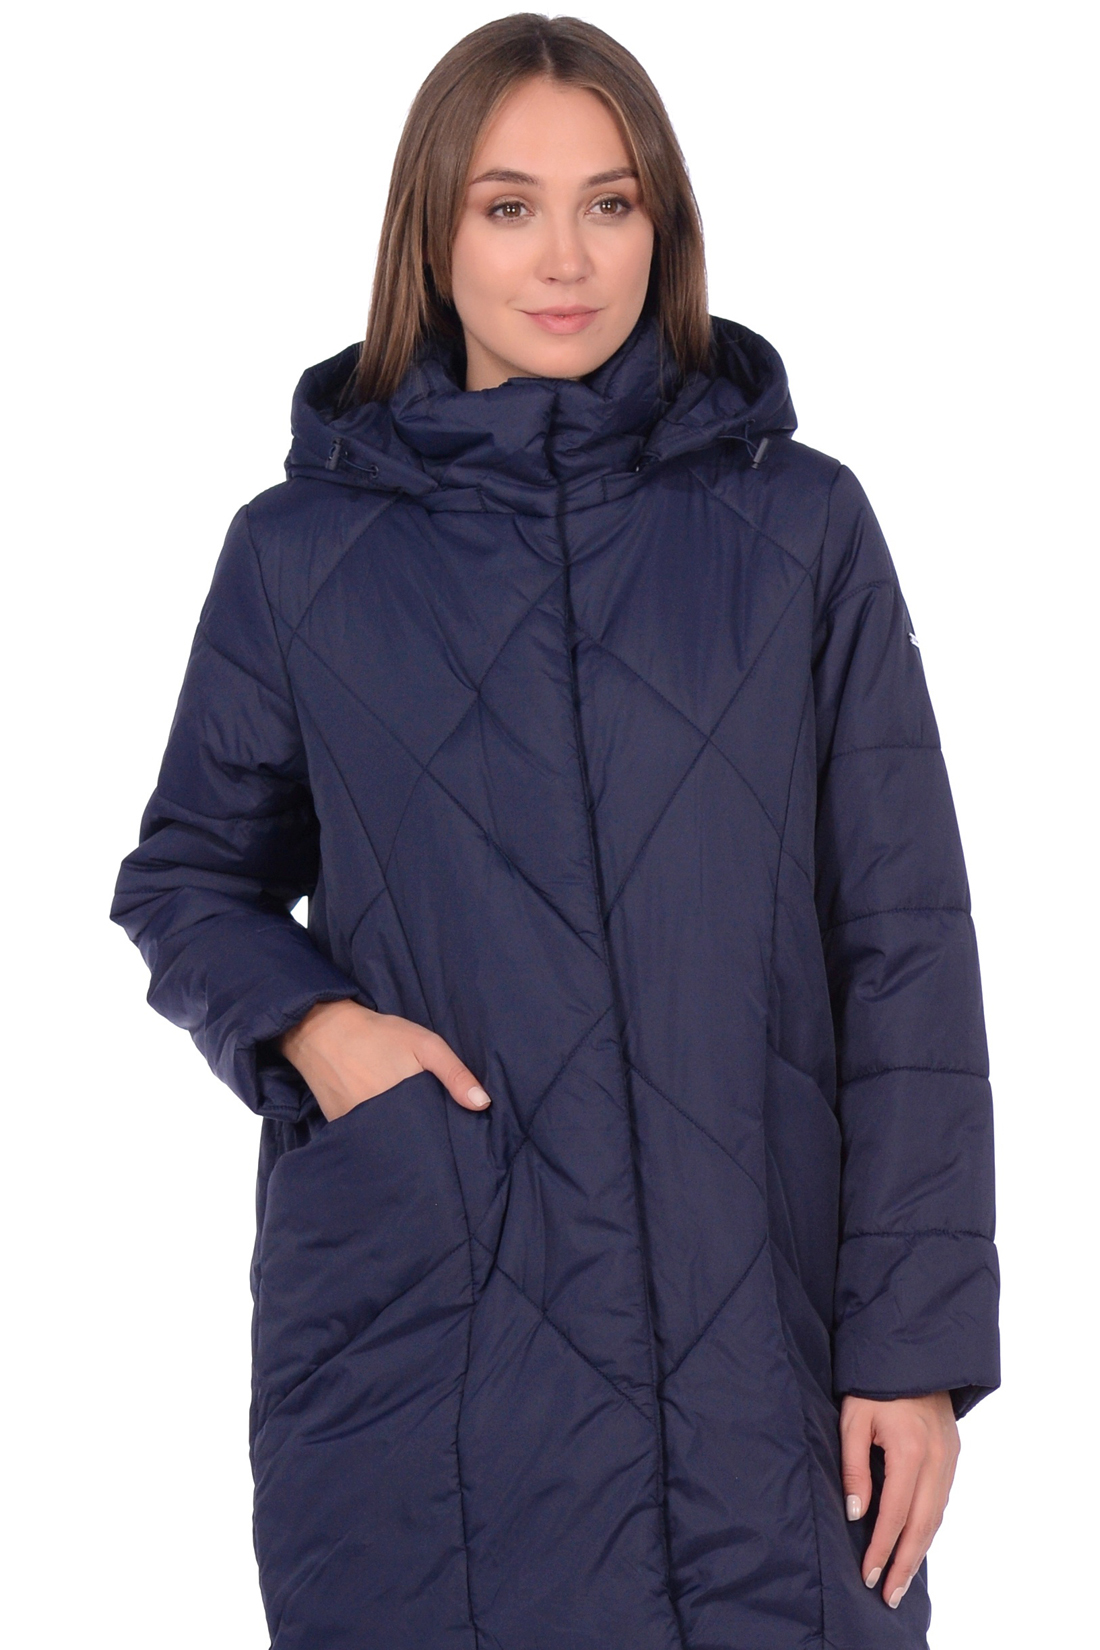 Куртка-парка с крупной простёжкой (арт. baon B039551), размер L, цвет синий Куртка-парка с крупной простёжкой (арт. baon B039551) - фото 5